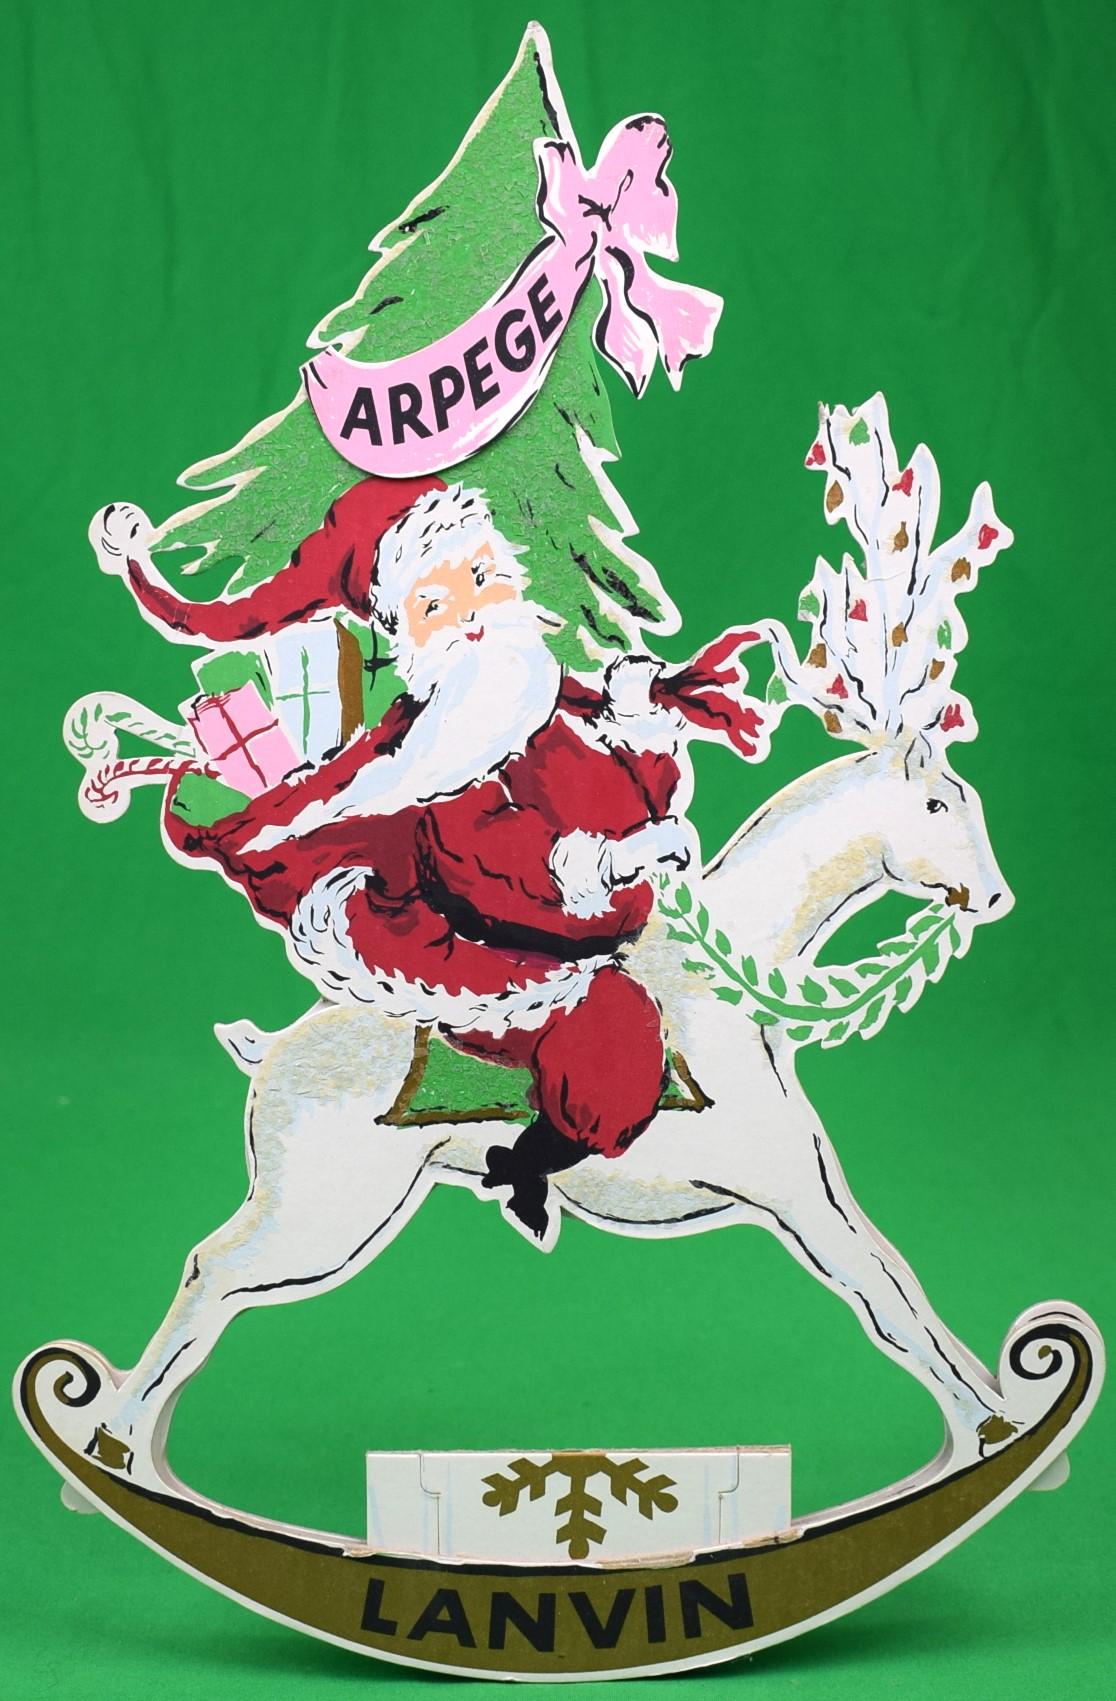 "Lanvin Paris Arpege Perfume Christmas c1950s Advert Sign w/ Santa On Reindeer" - Art by Alexander Warren Montel